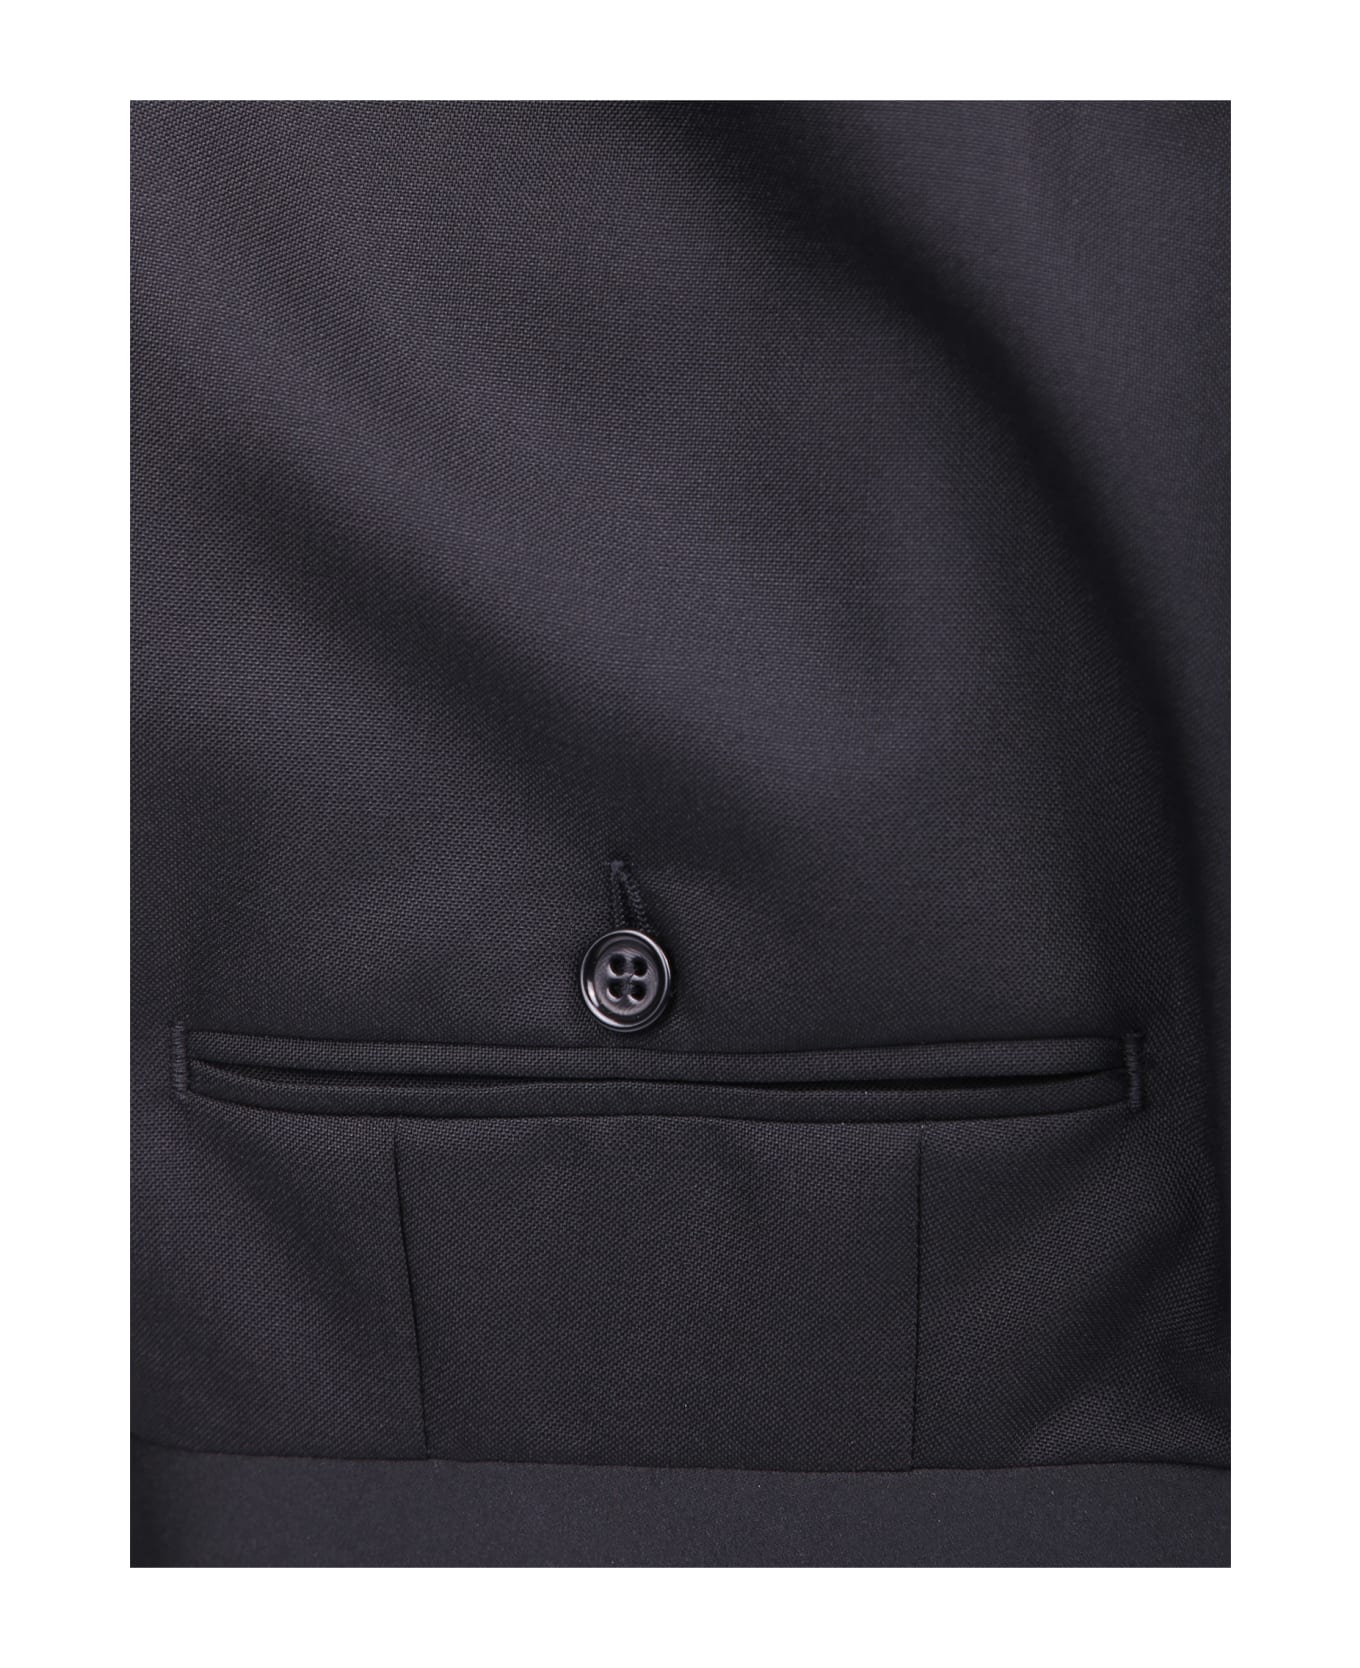 Canali Black Suit - Black スーツ